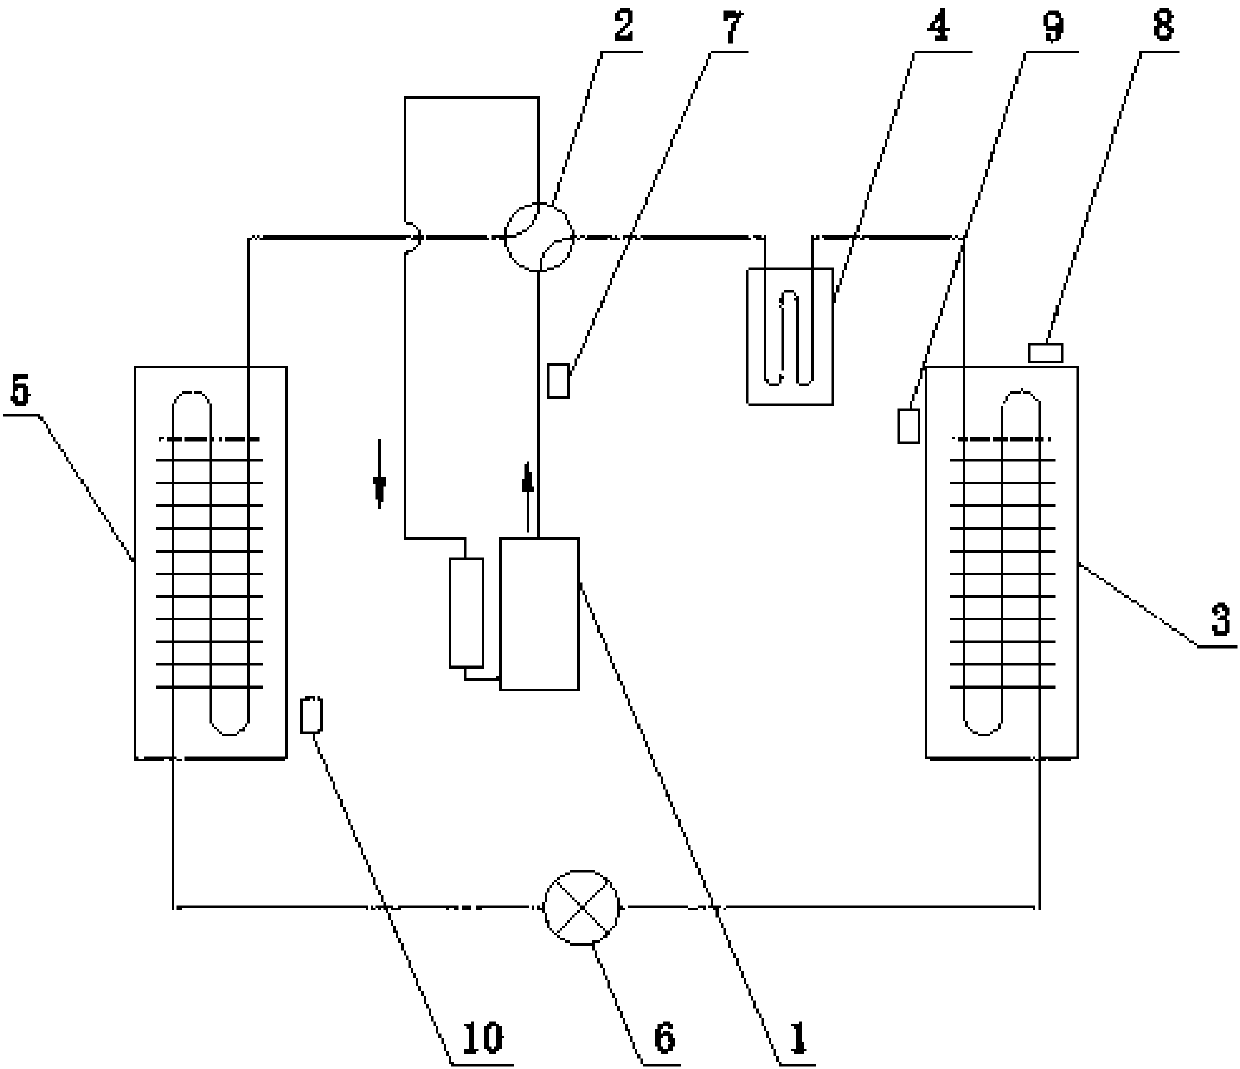 Control method for air conditioner in multimedia classroom